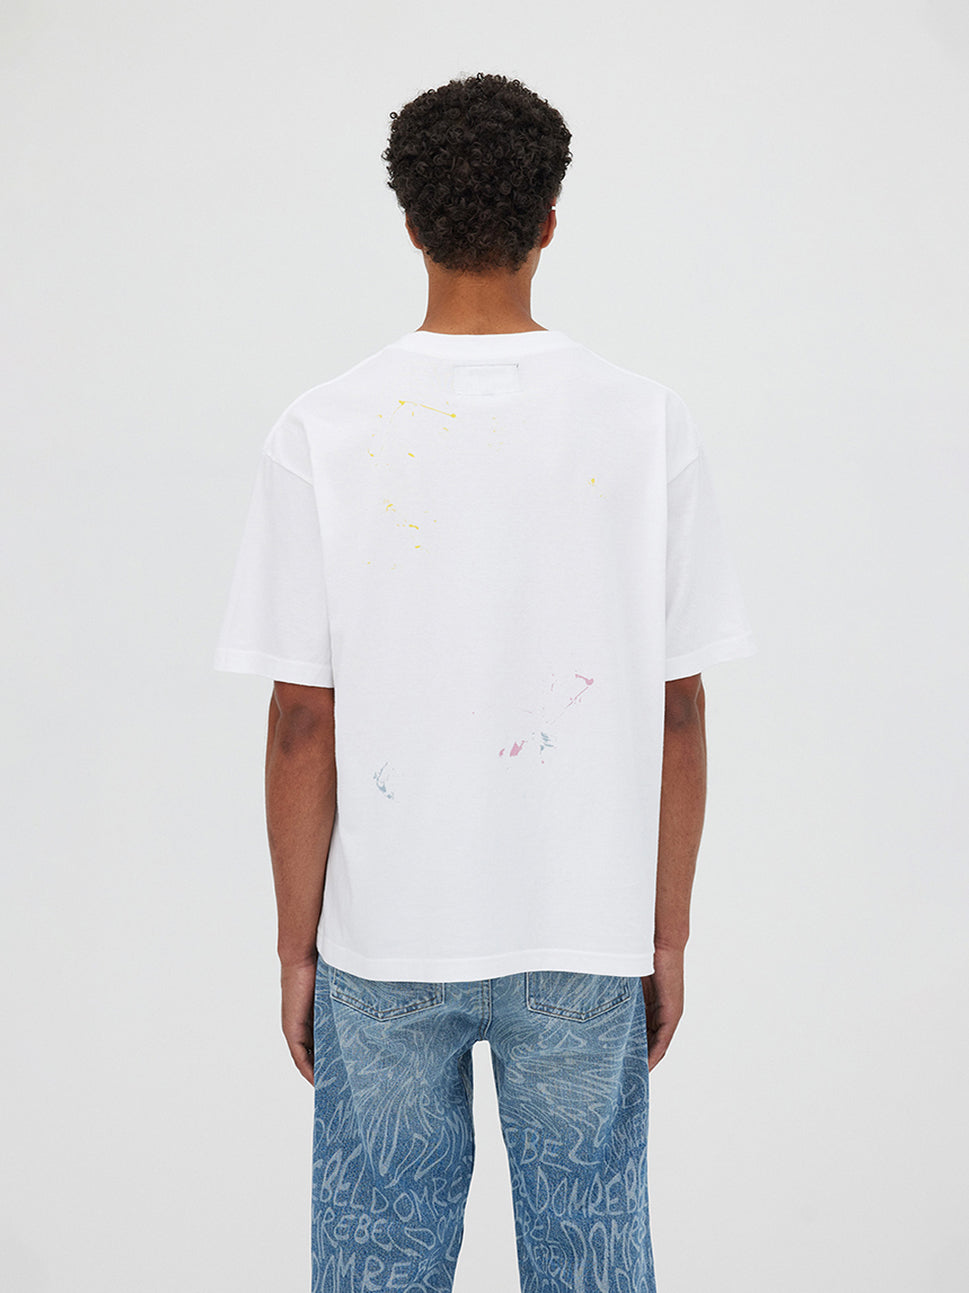 Domrebel Men's White Art Class T Shirt